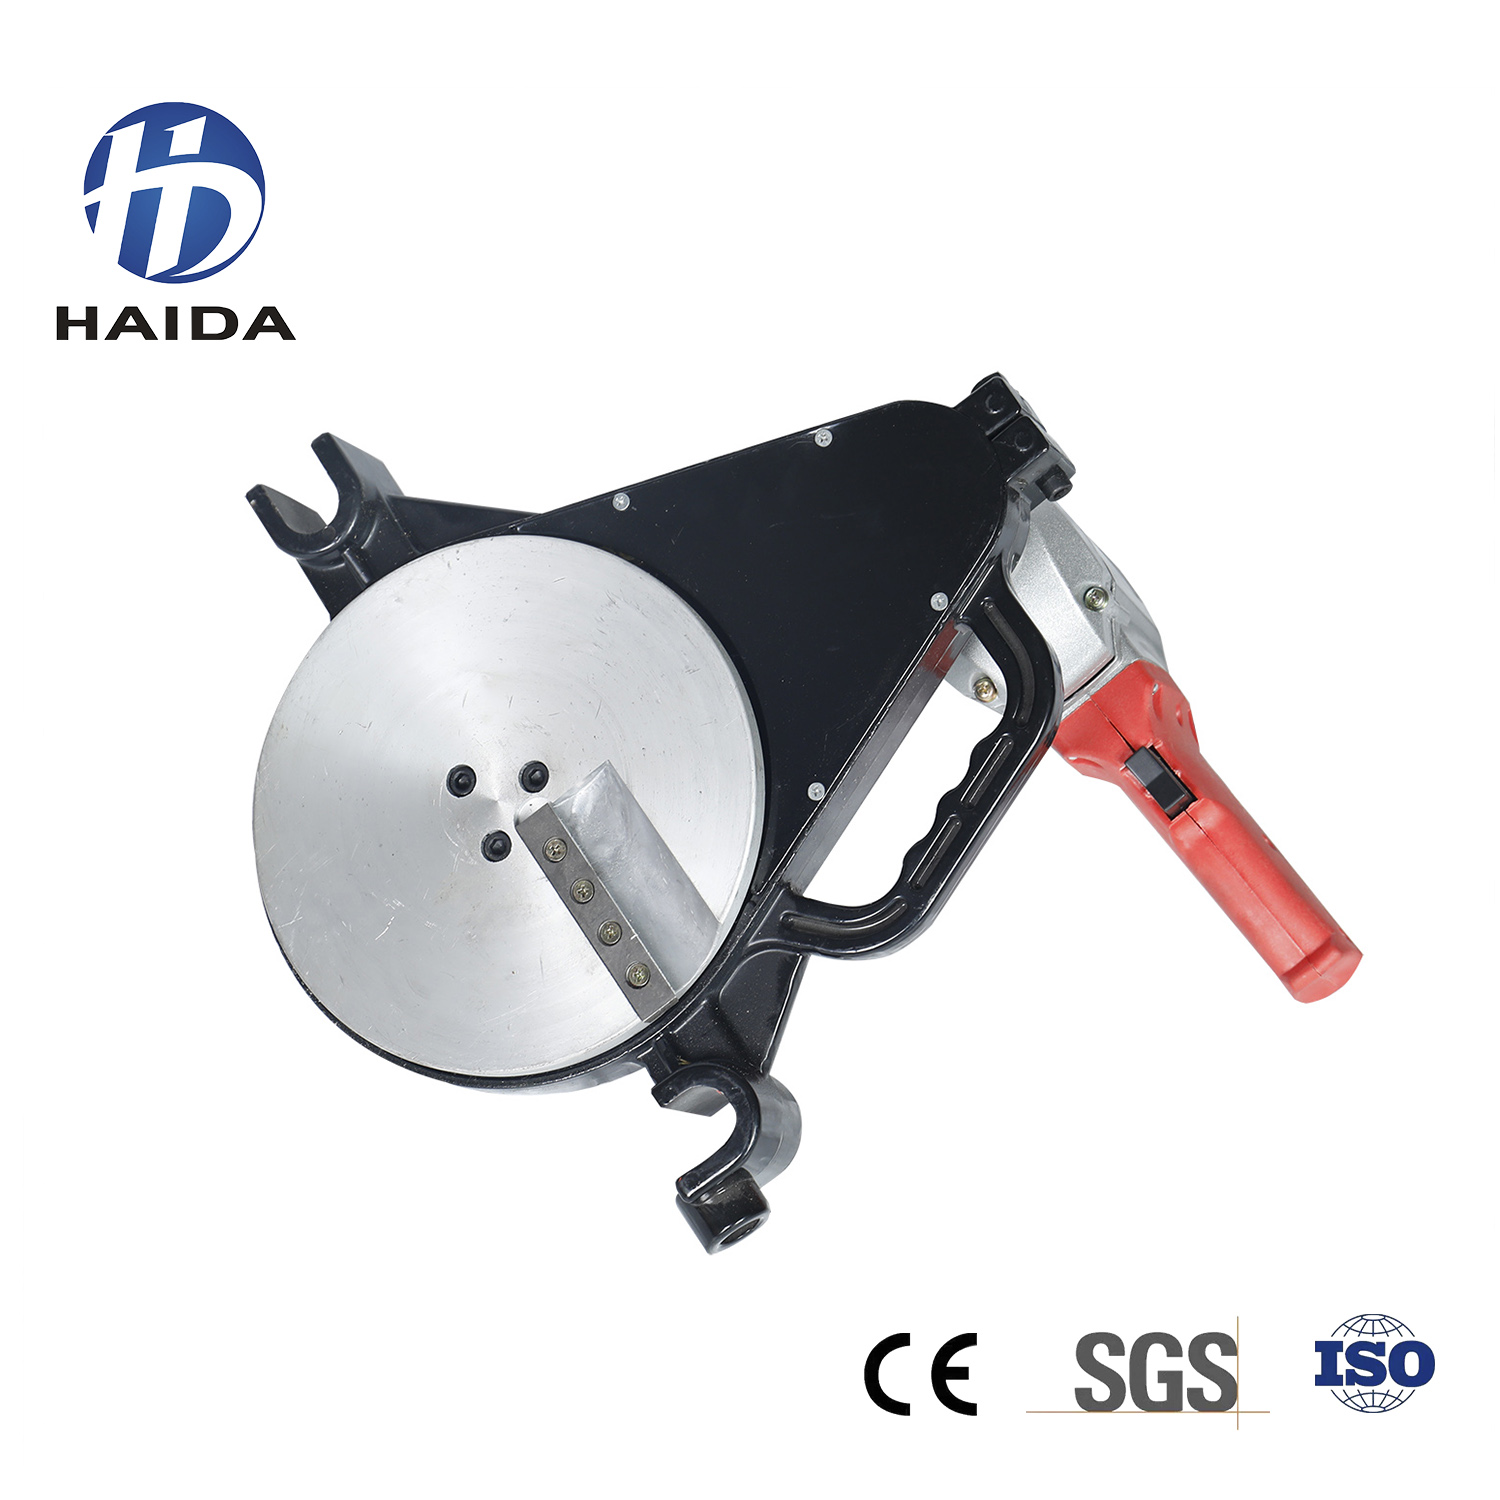 HD-LG160 (2R) BUTT FUSION WELDING MACHINE